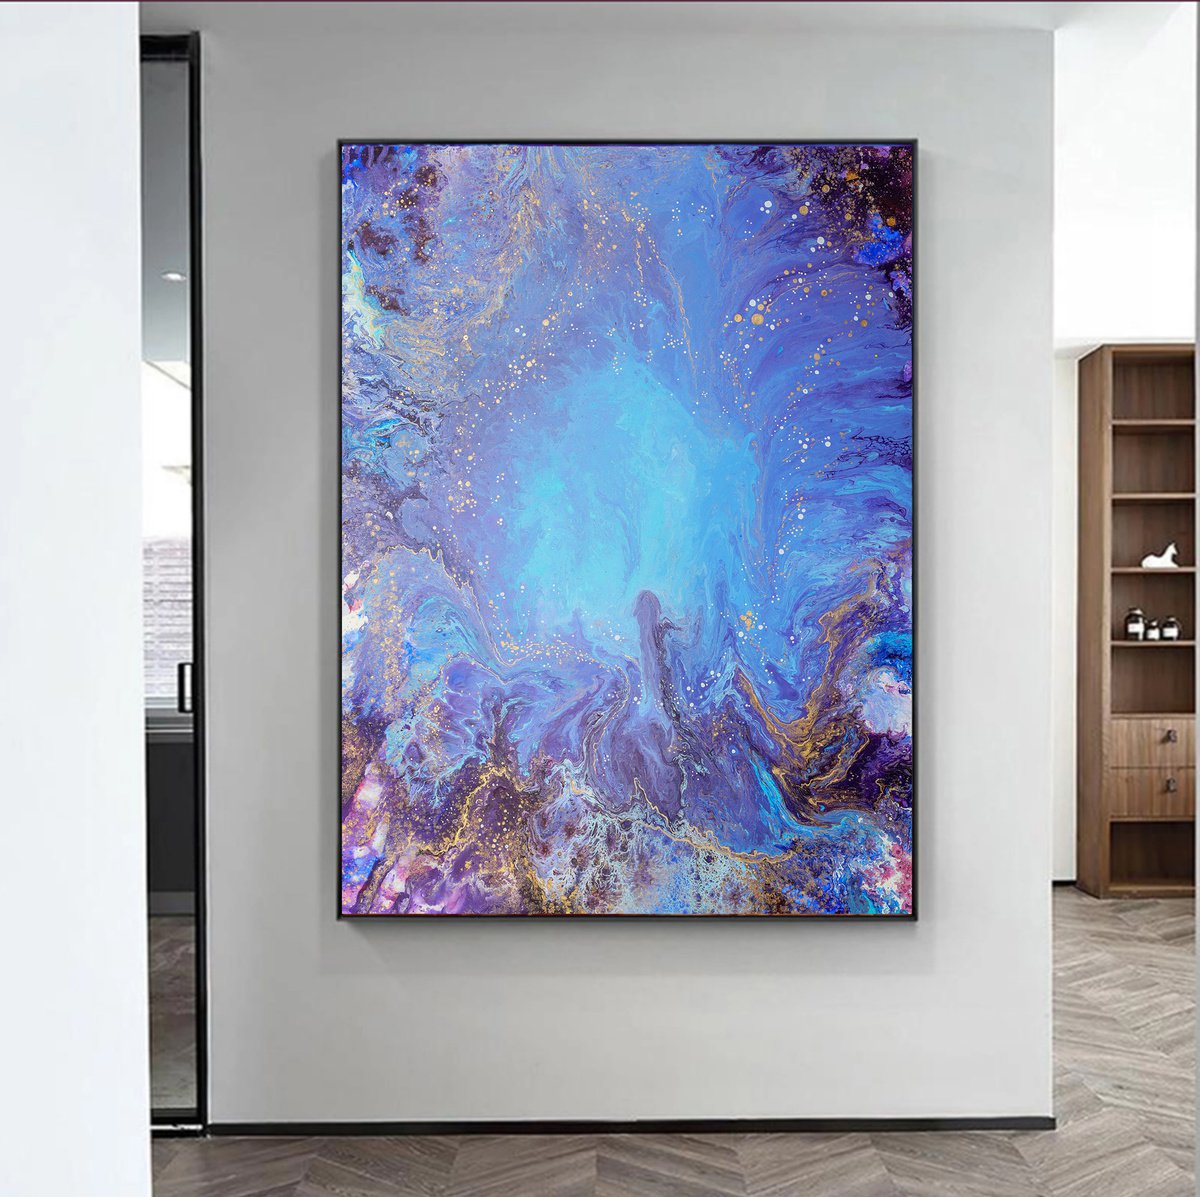 130x100cm. /Euphoriaoriginal acrylic painting, abstract art, explosion of emotions, offi... by Alexandra Dobreikin